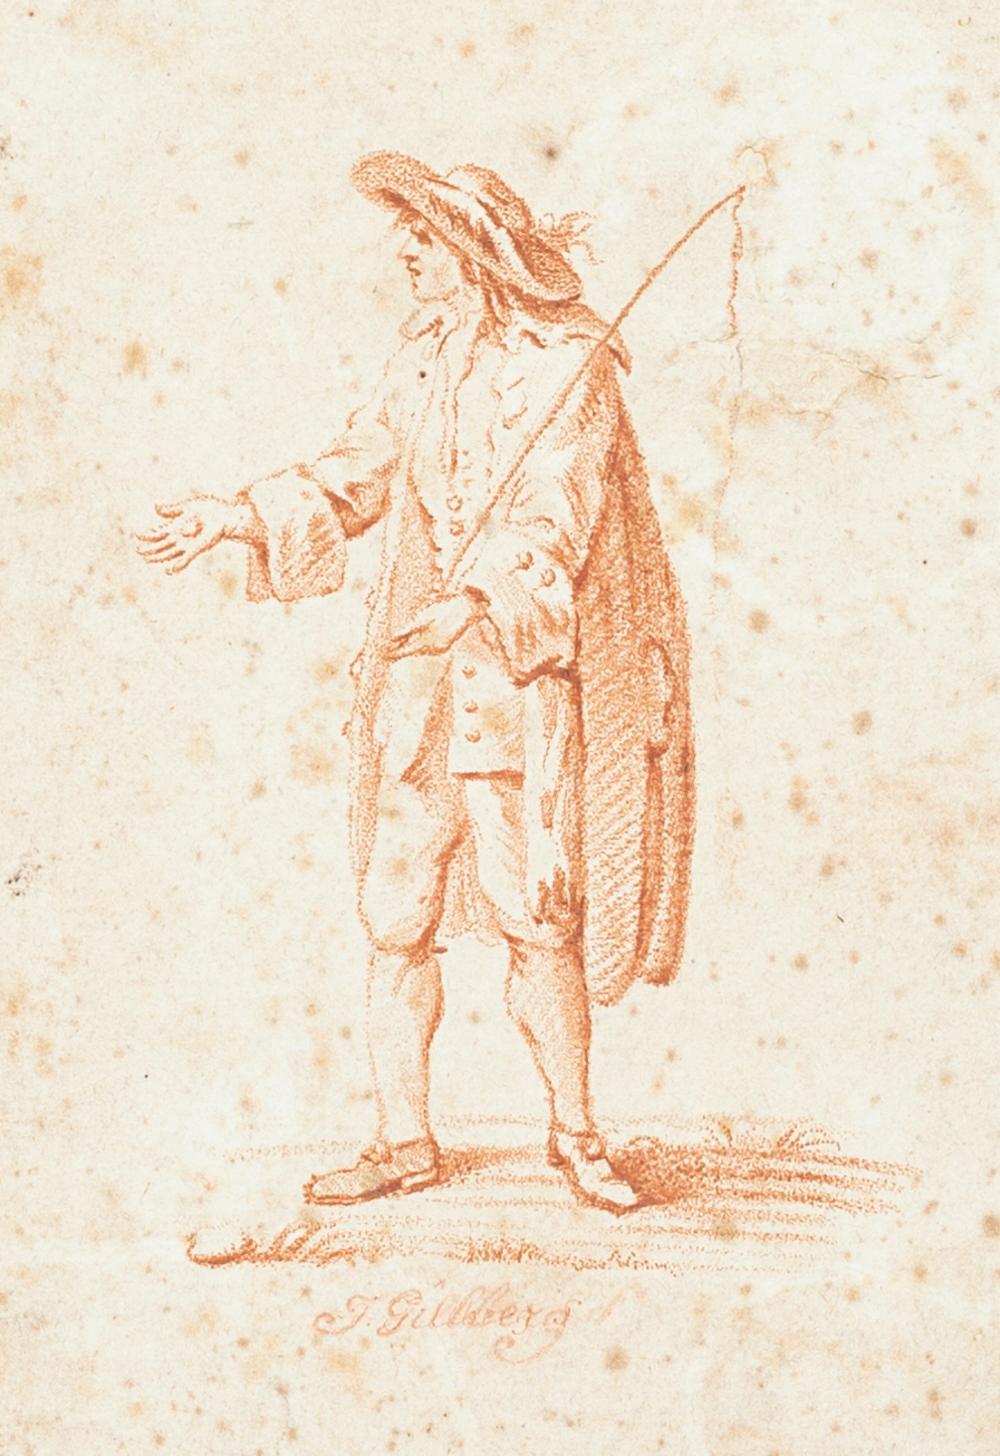 Jacob Galsberg Figurative Art - Tamer of Horses - Original Sanguine Drawing by J. Galsberg - Late 18th Century